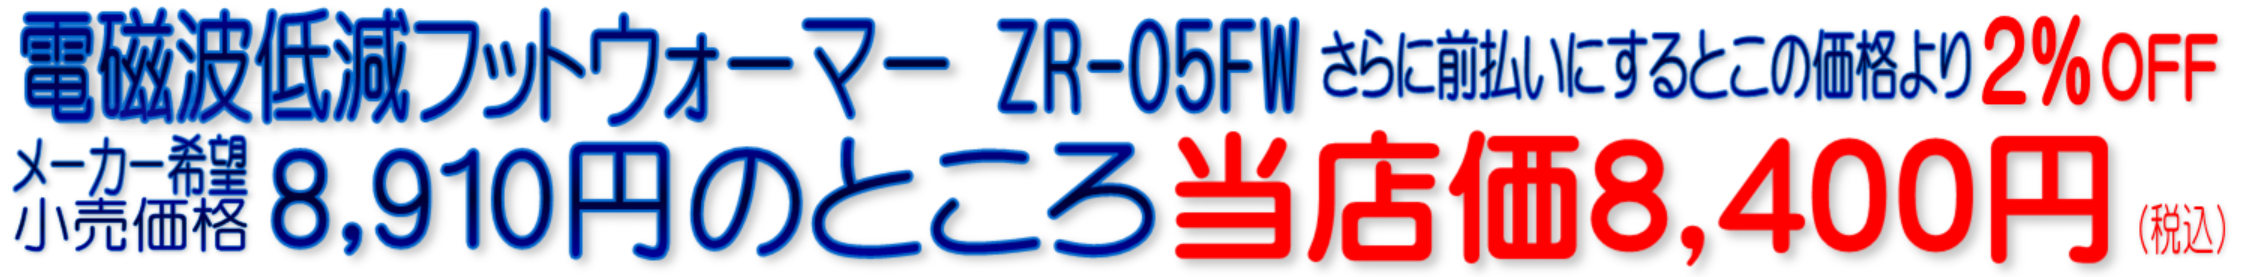 ZR-05FW 電磁波低減フットウォーマー